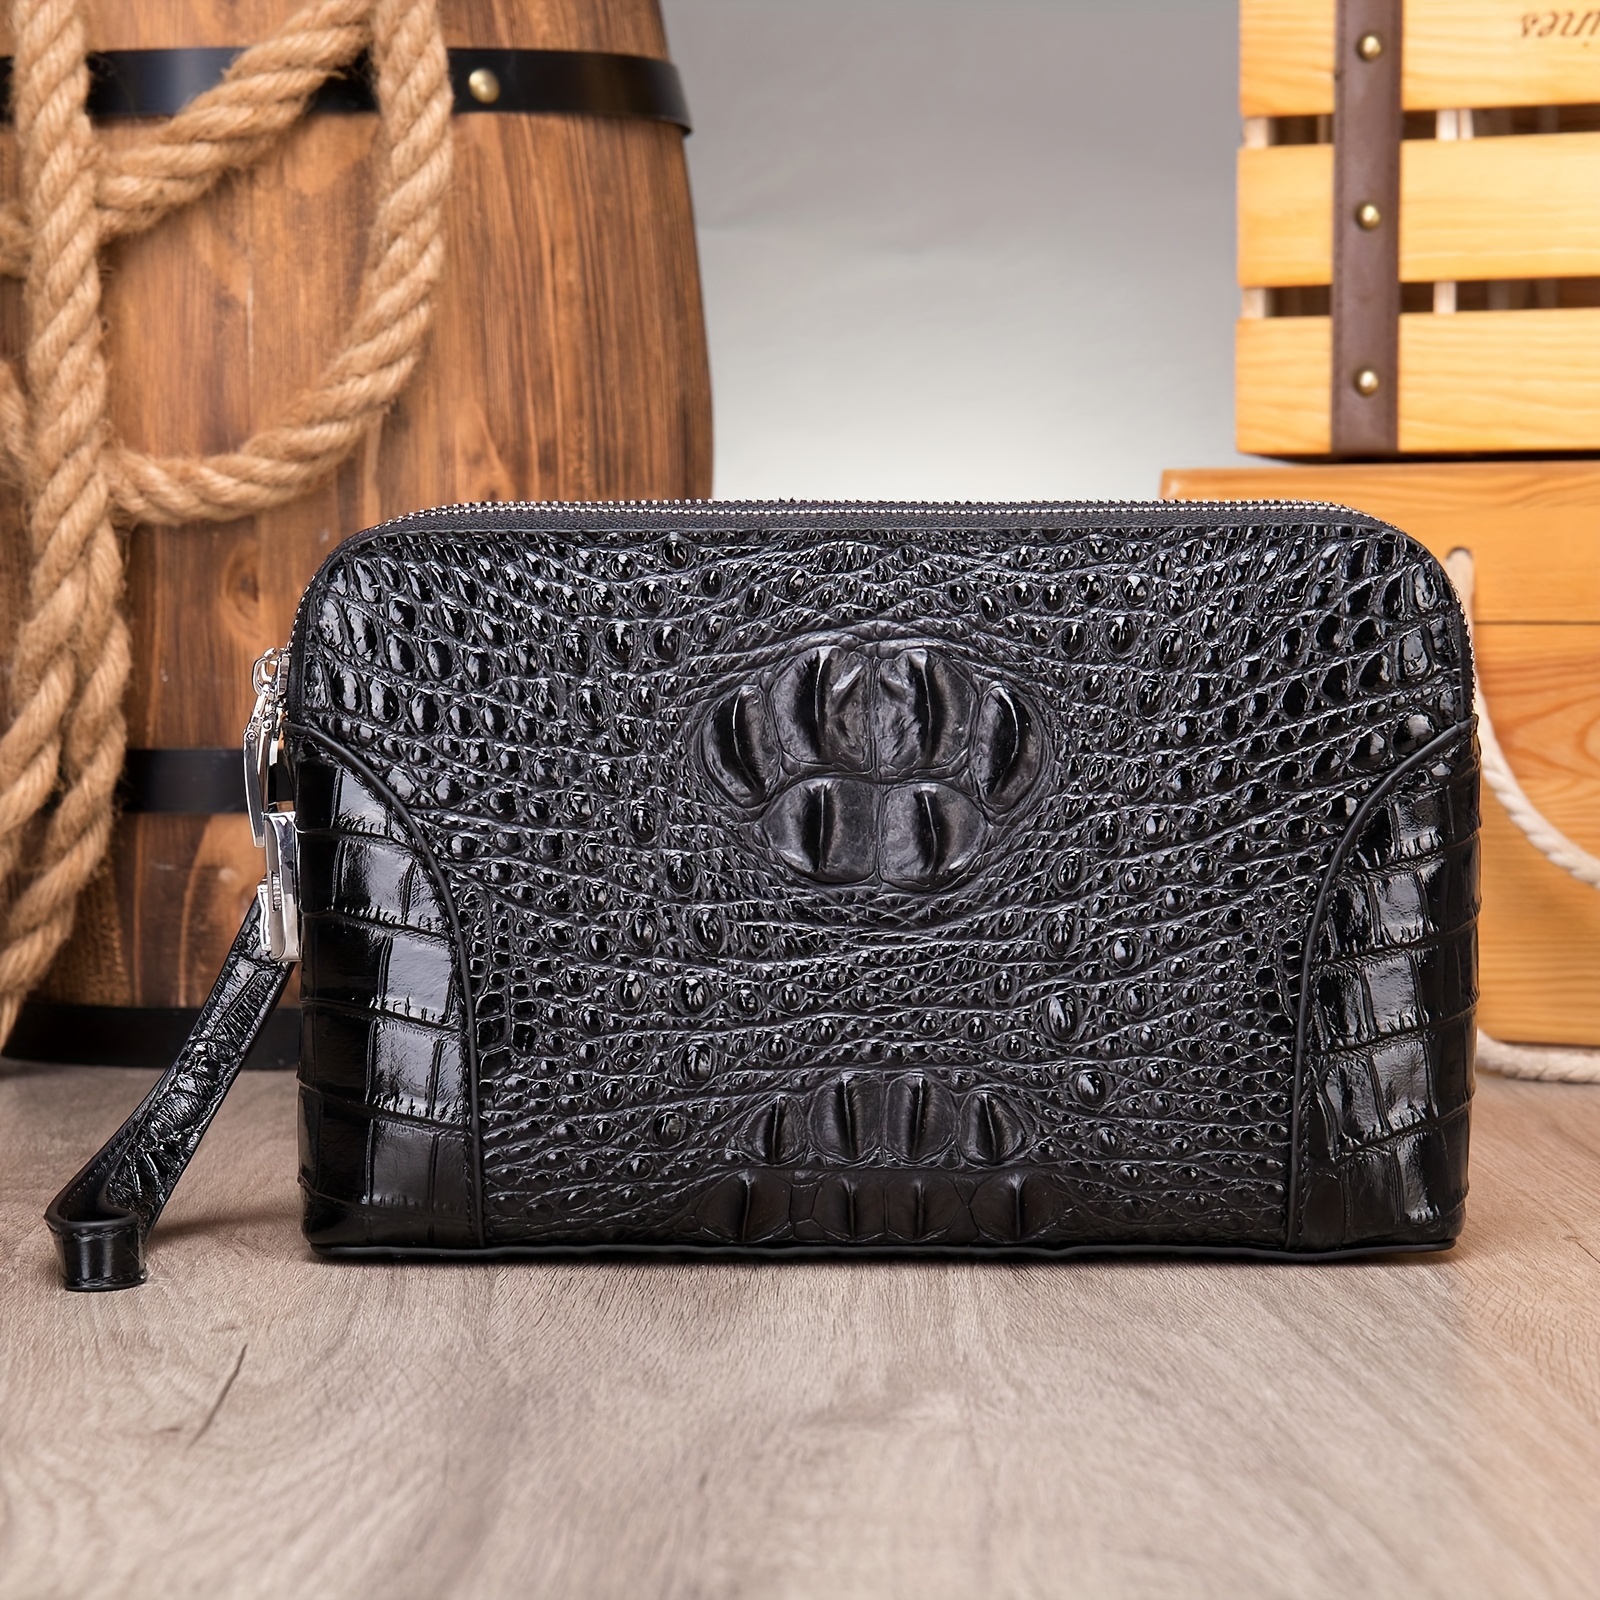 Chue Genuine Crocodile Skin Handbag For Lady New Leather Fashion